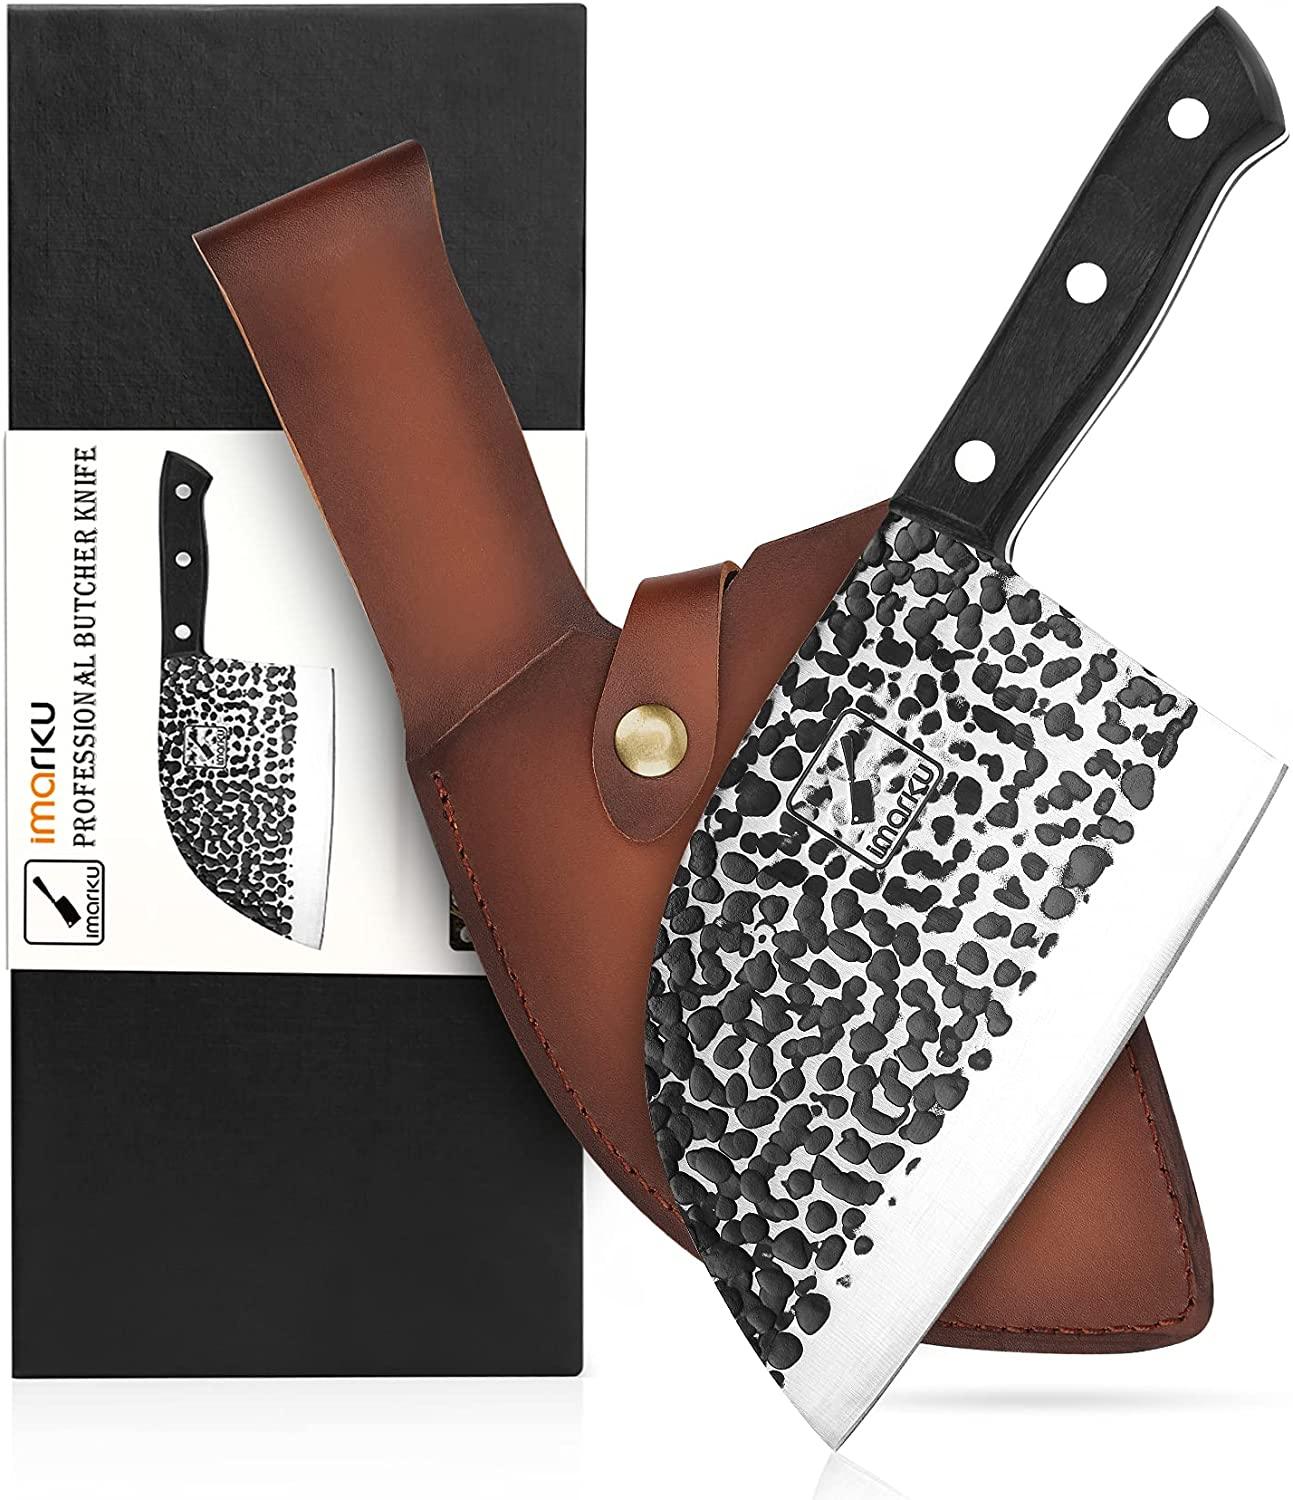 How to Buy a Butcher's Knife - IMARKU